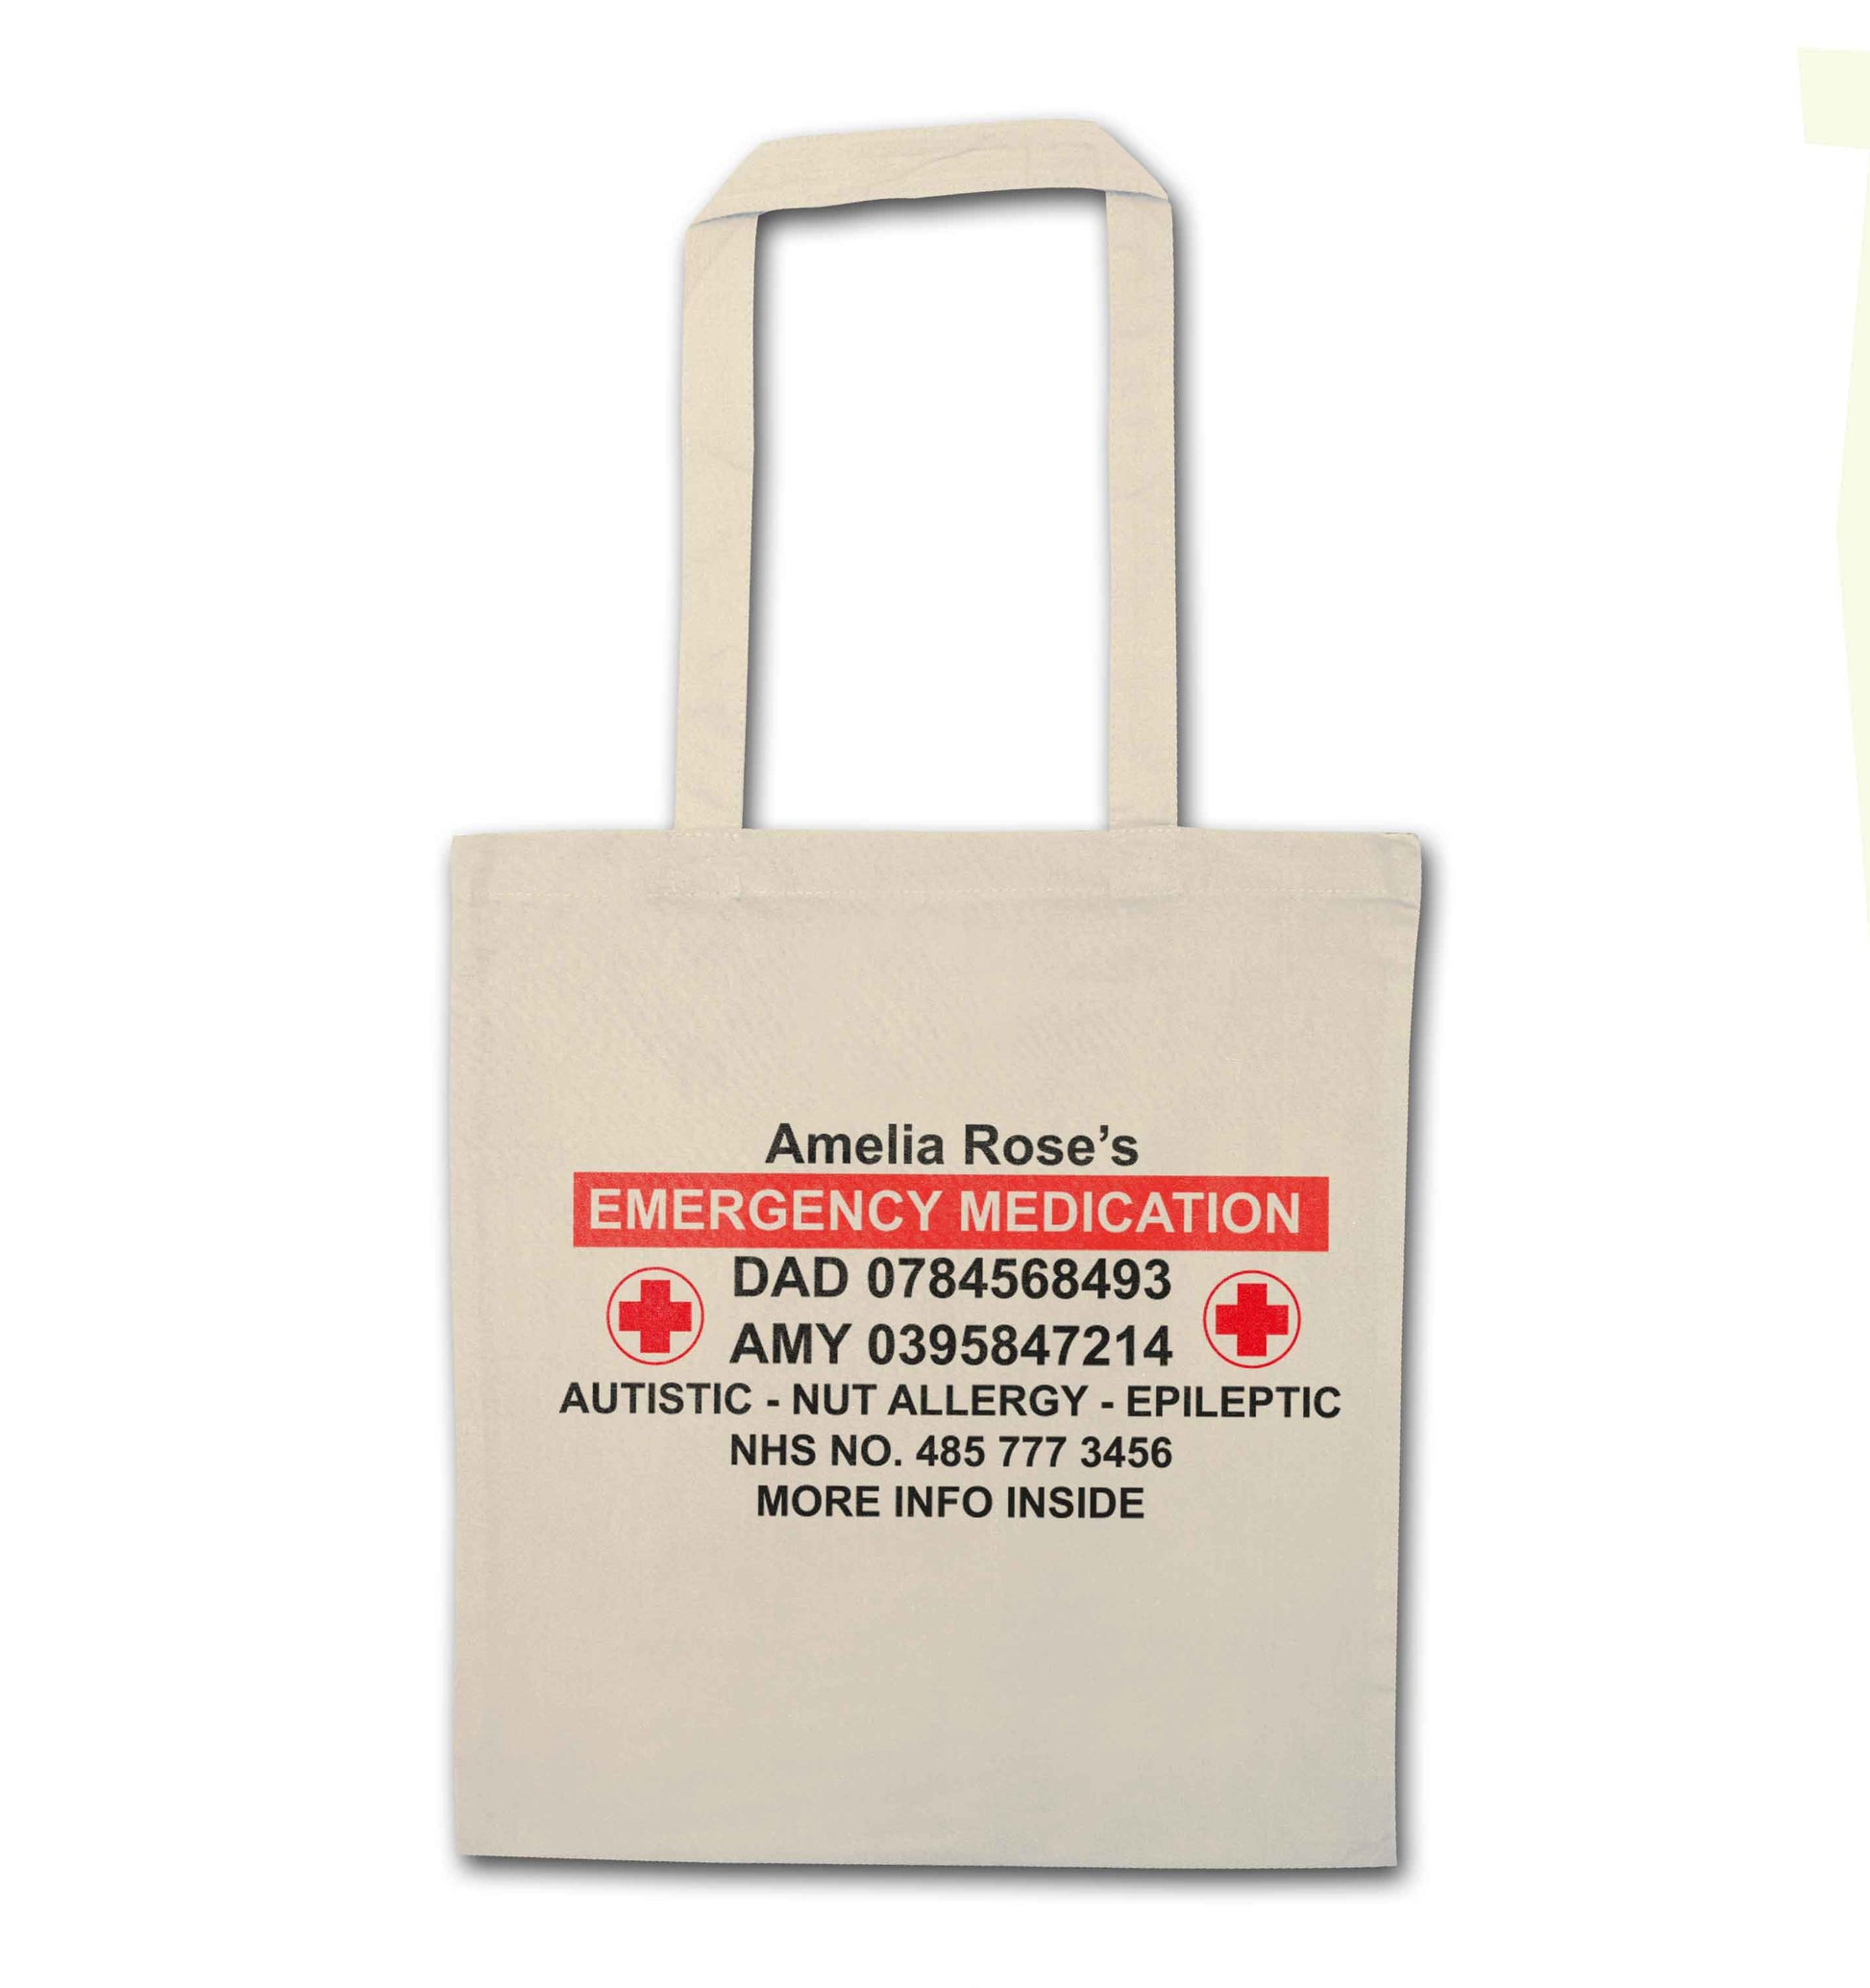 Personalised emergency medication bag natural tote bag